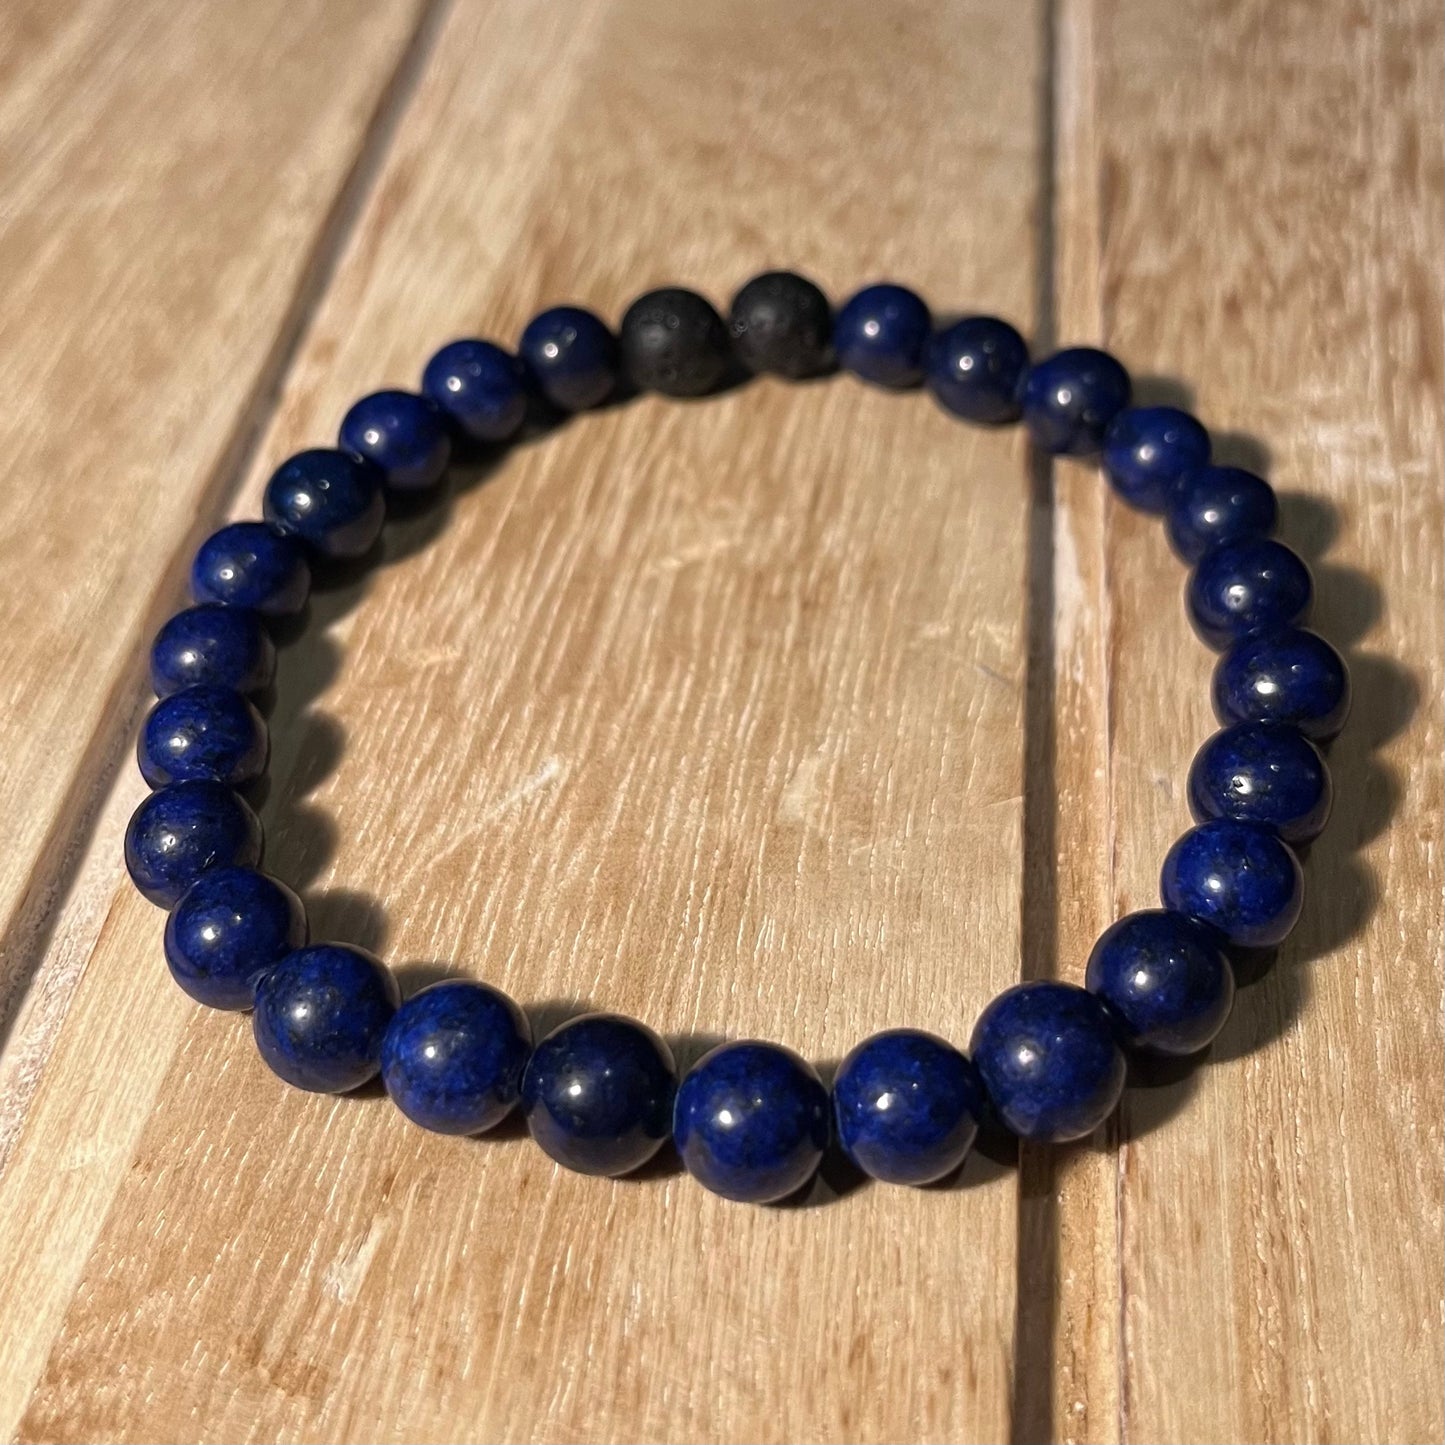 Large - Lapis Lazuli (Navy) Beaded Stretch Bracelet